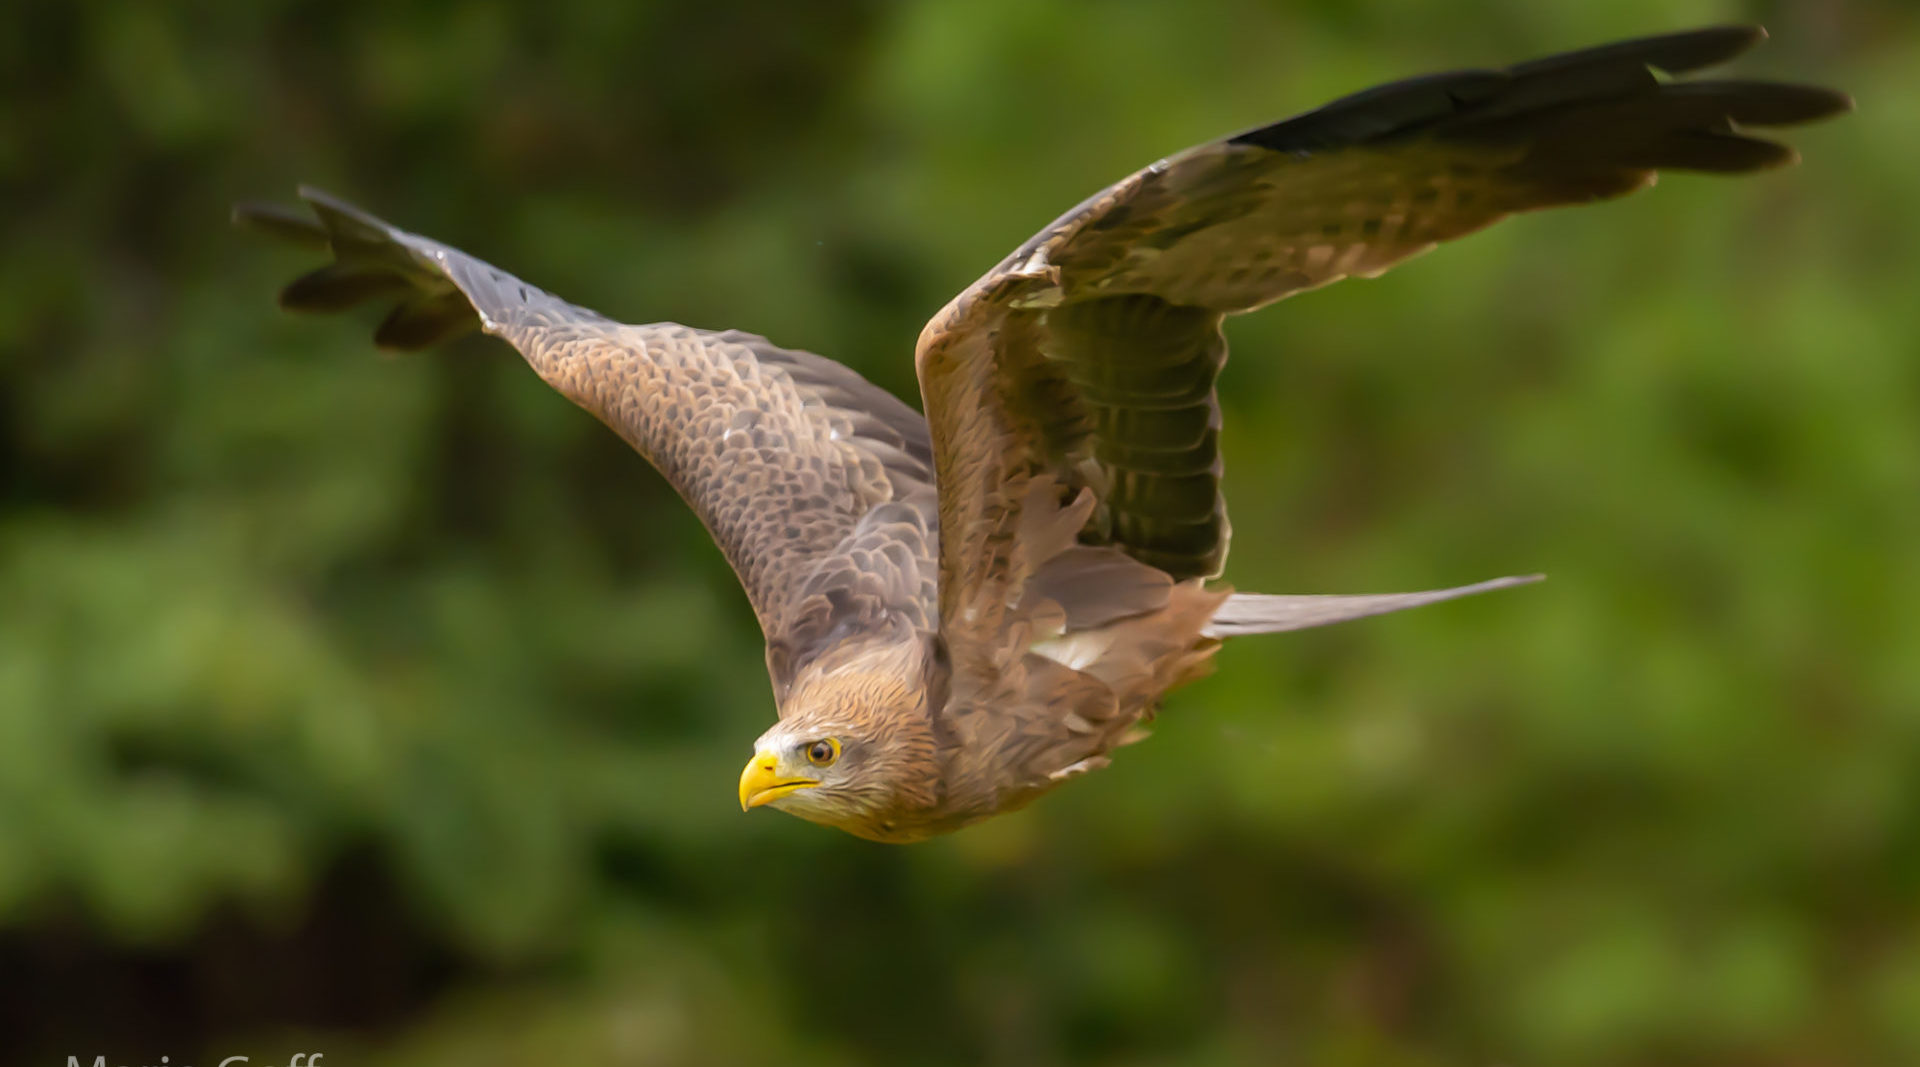 Tack Sharp Photos of Birds-in-Flight, the easy way